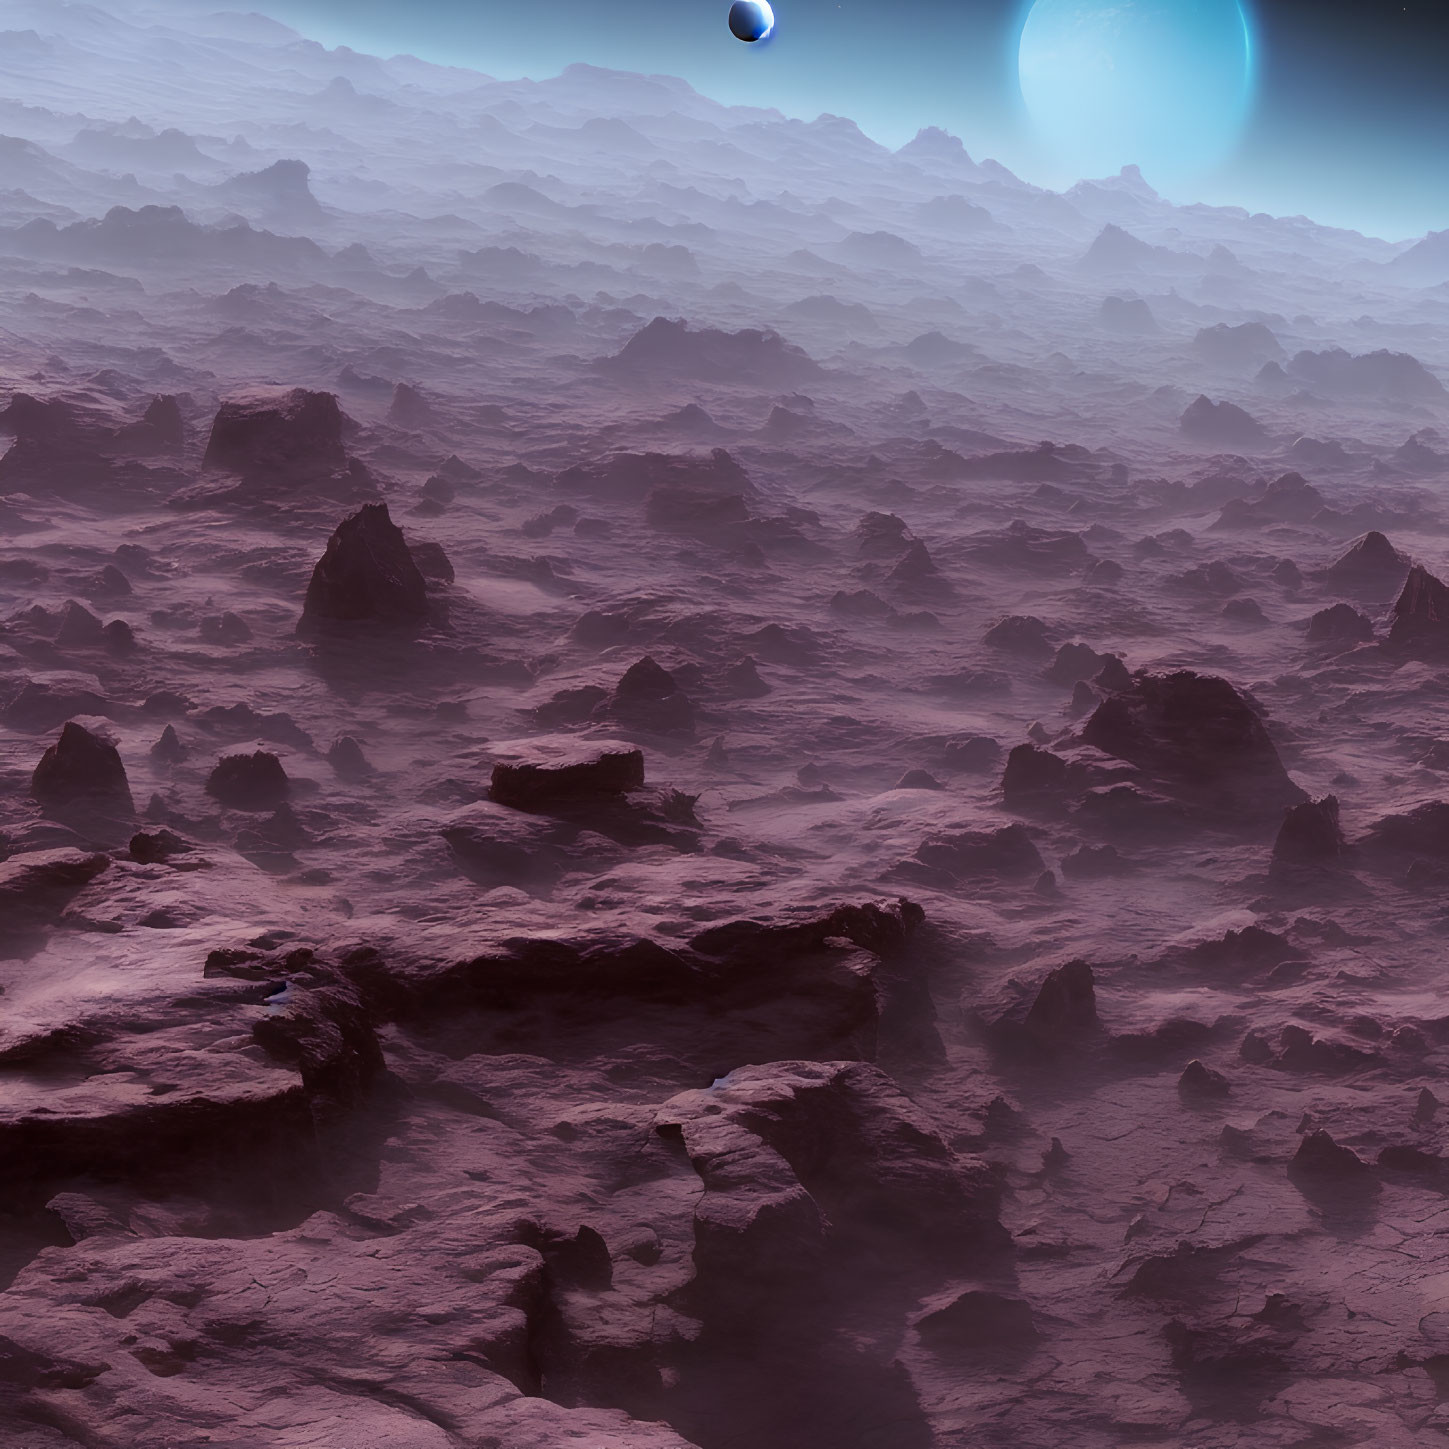 Desolate rocky alien landscape under purple sky